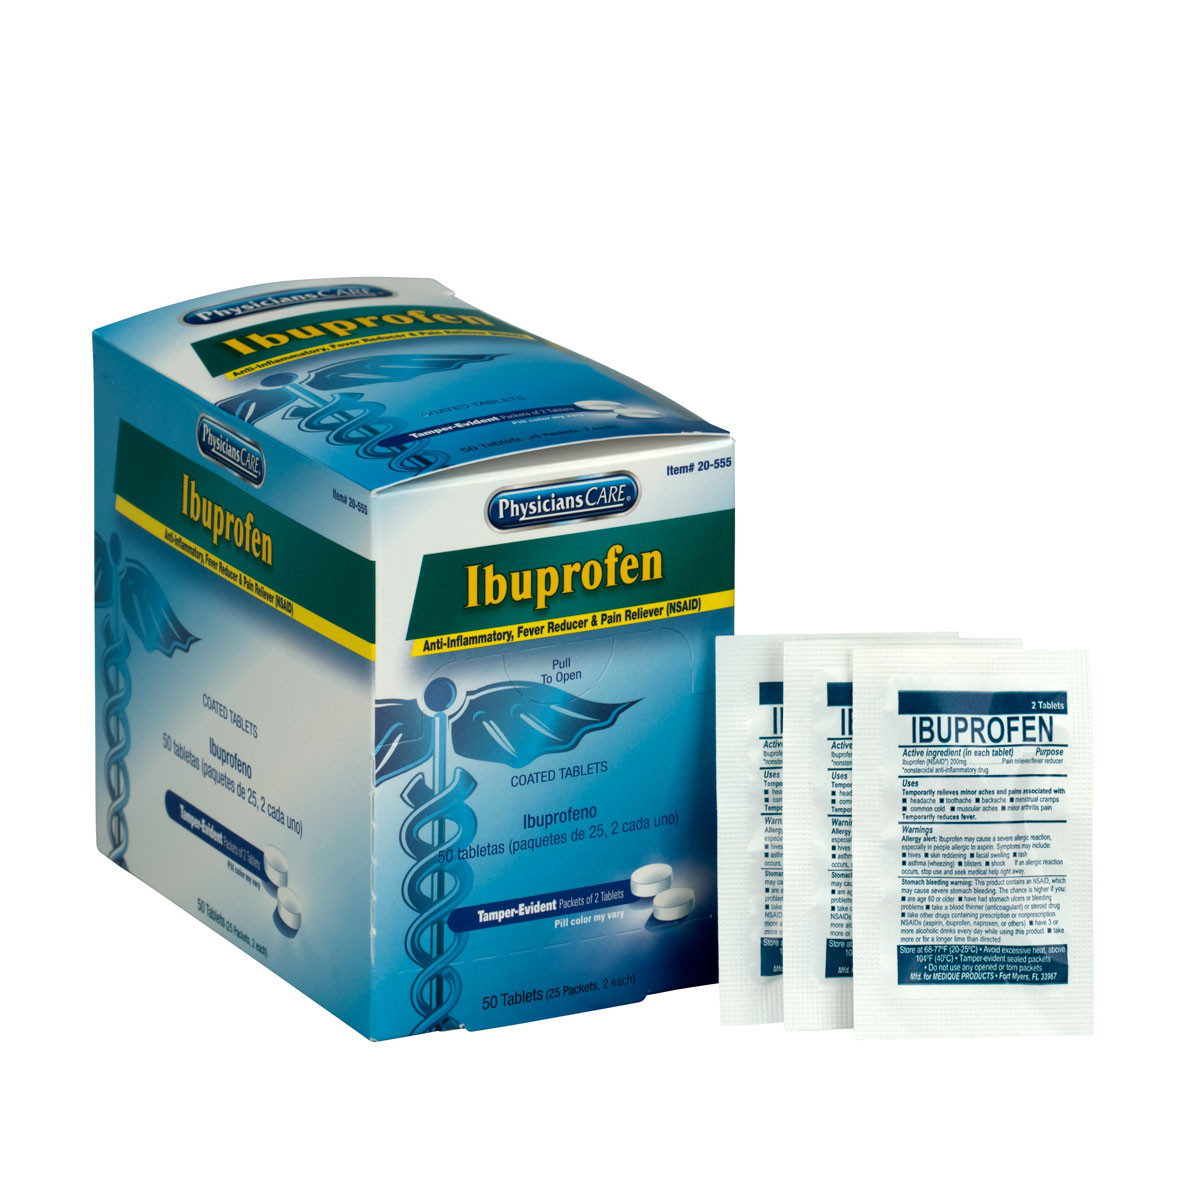 PhysiciansCare 200mg Ibuprofen, 25x2/Box